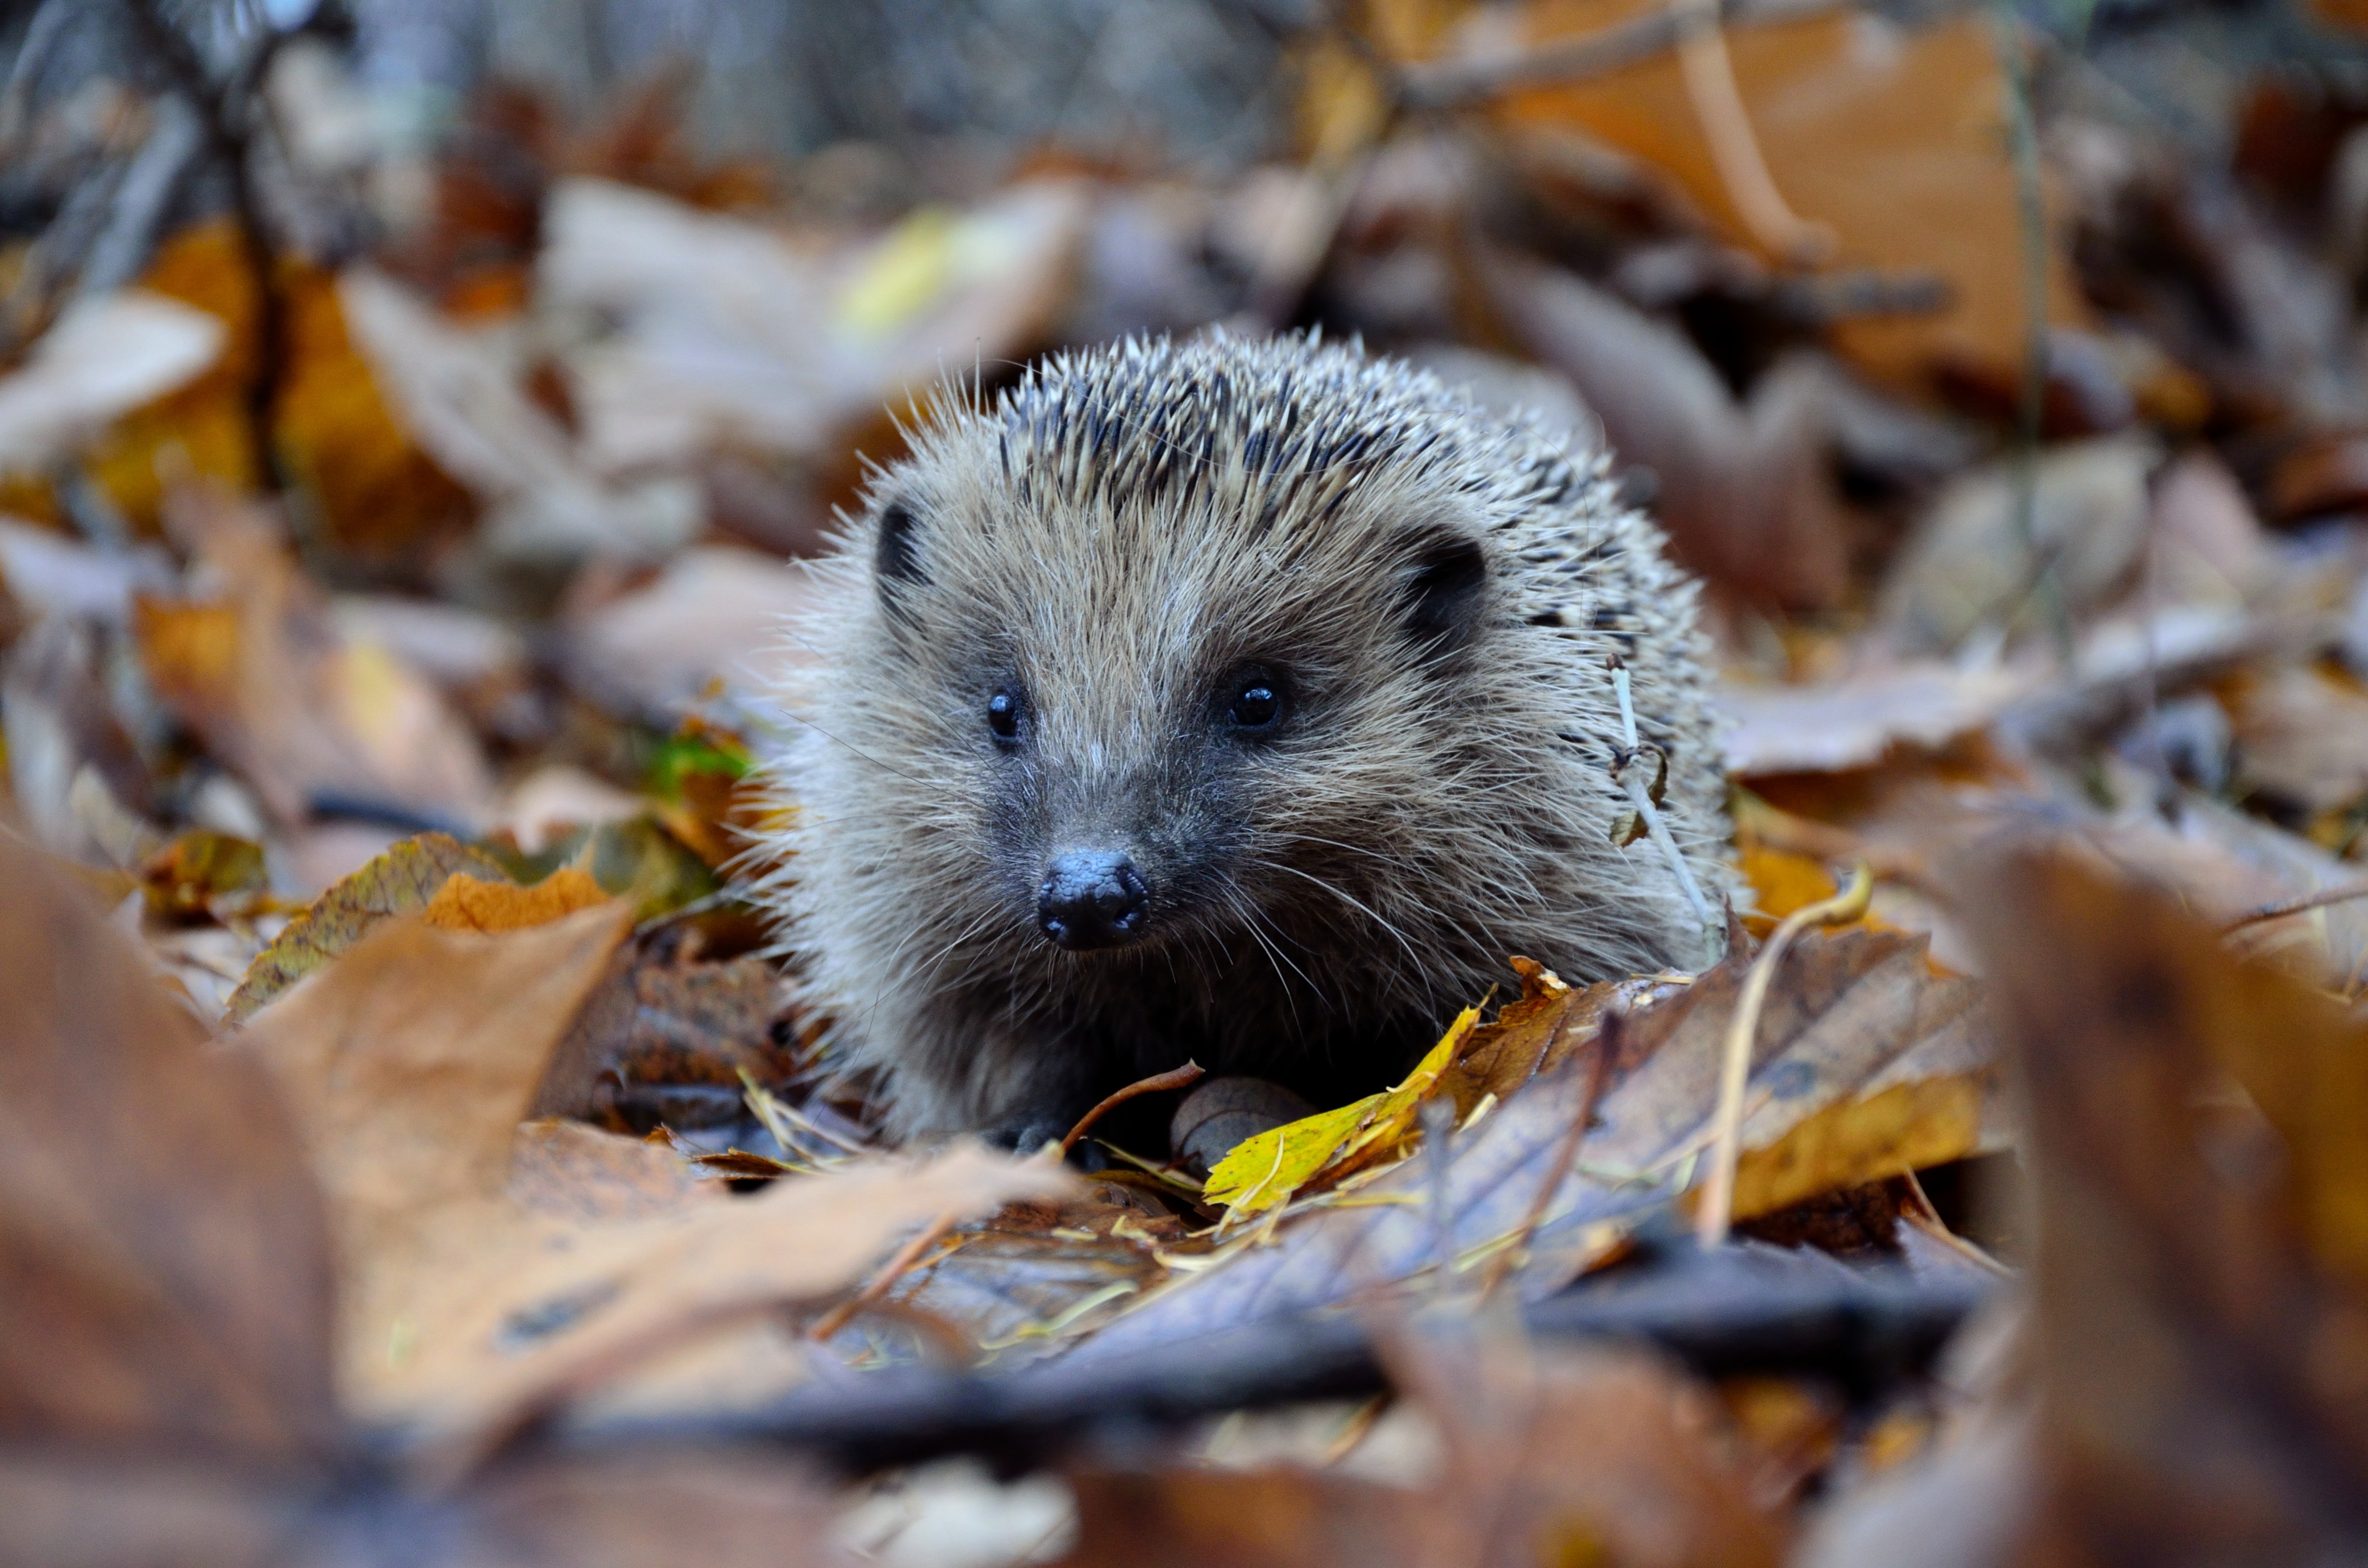 Hedgehog in a pile of leaves. Photo by Piotr Laskawski via Unsplash